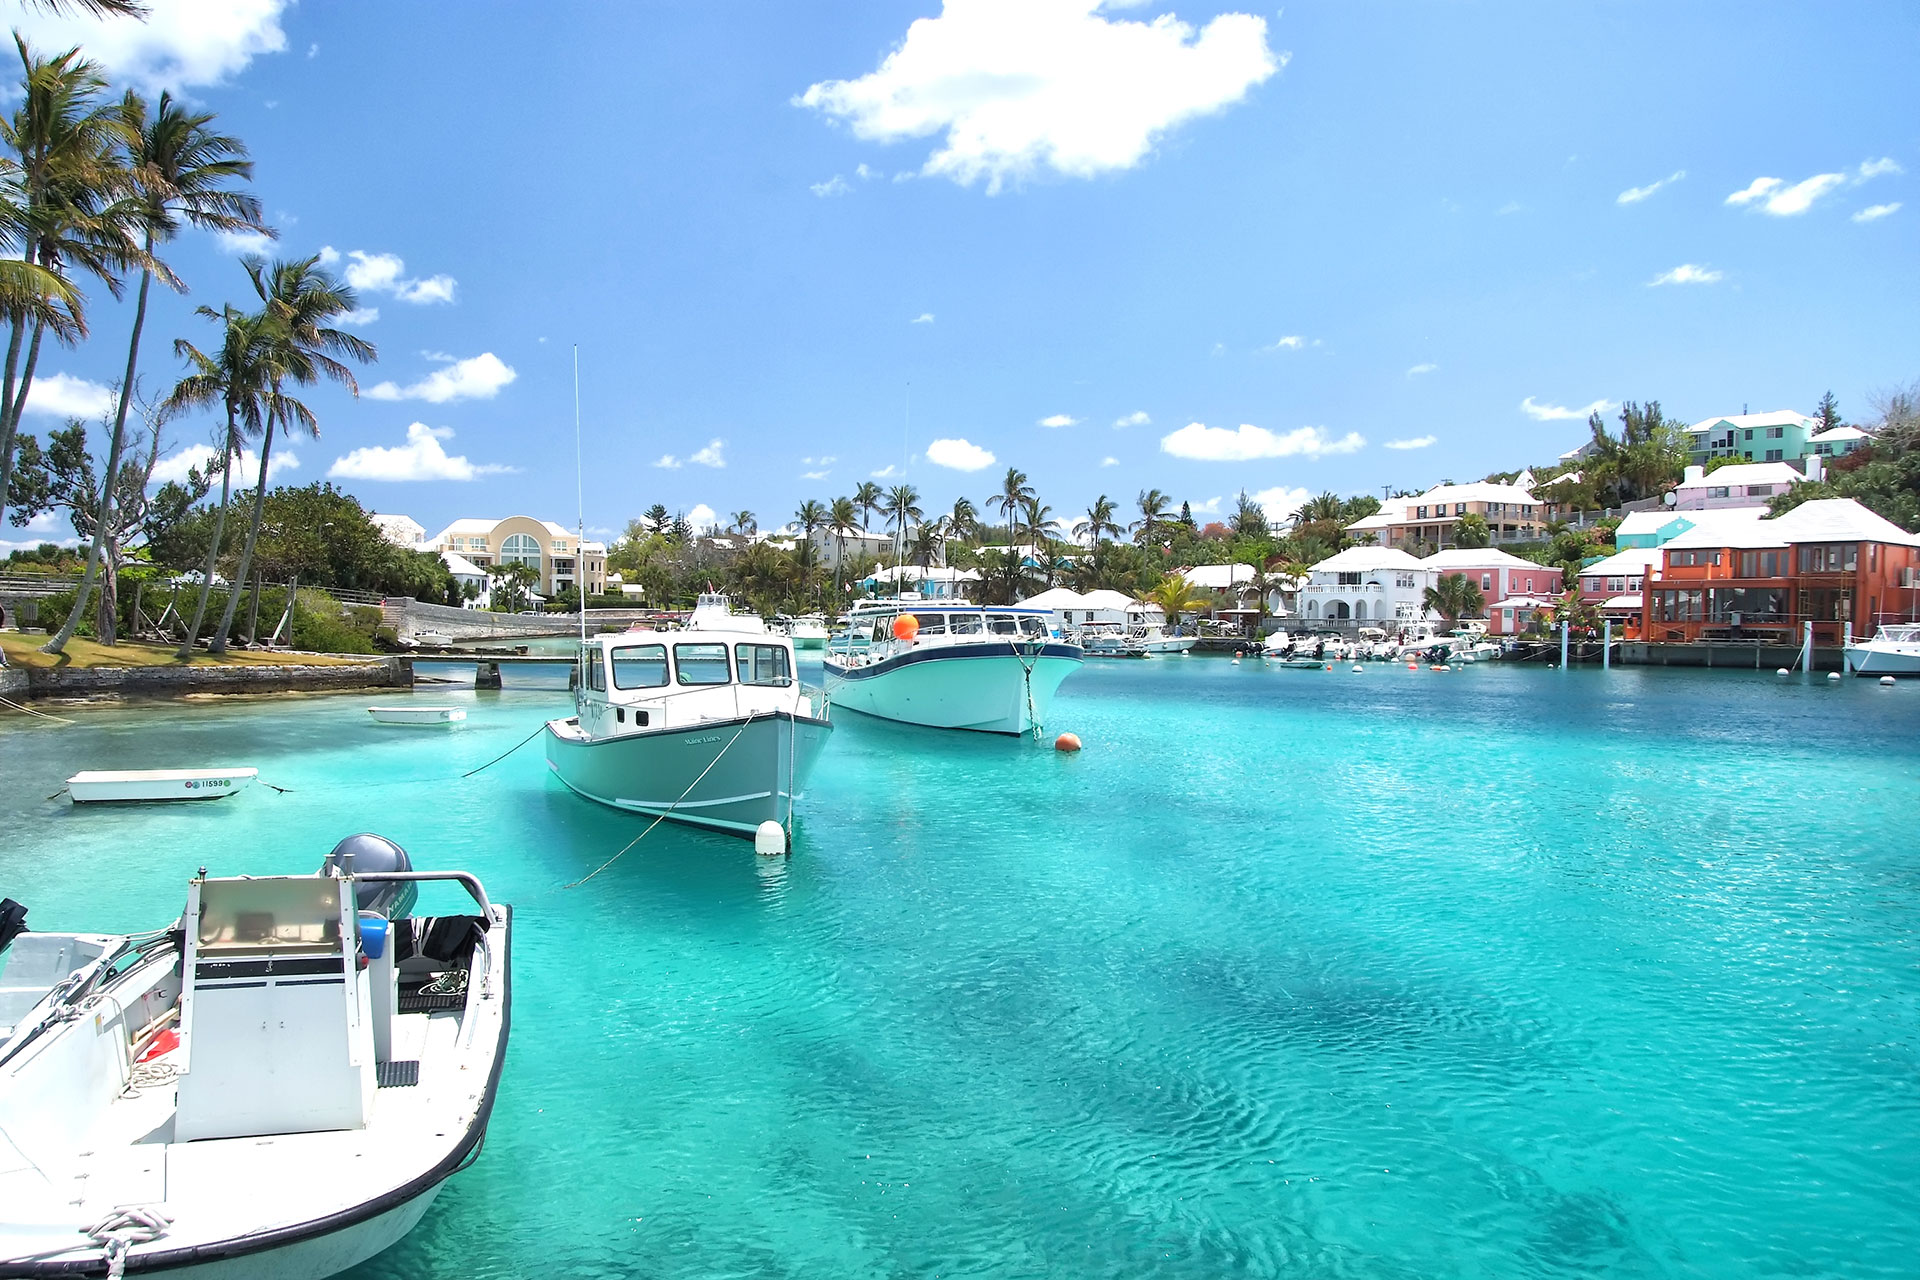 Bermuda; Courtesy of Just dance/Shutterstock.com